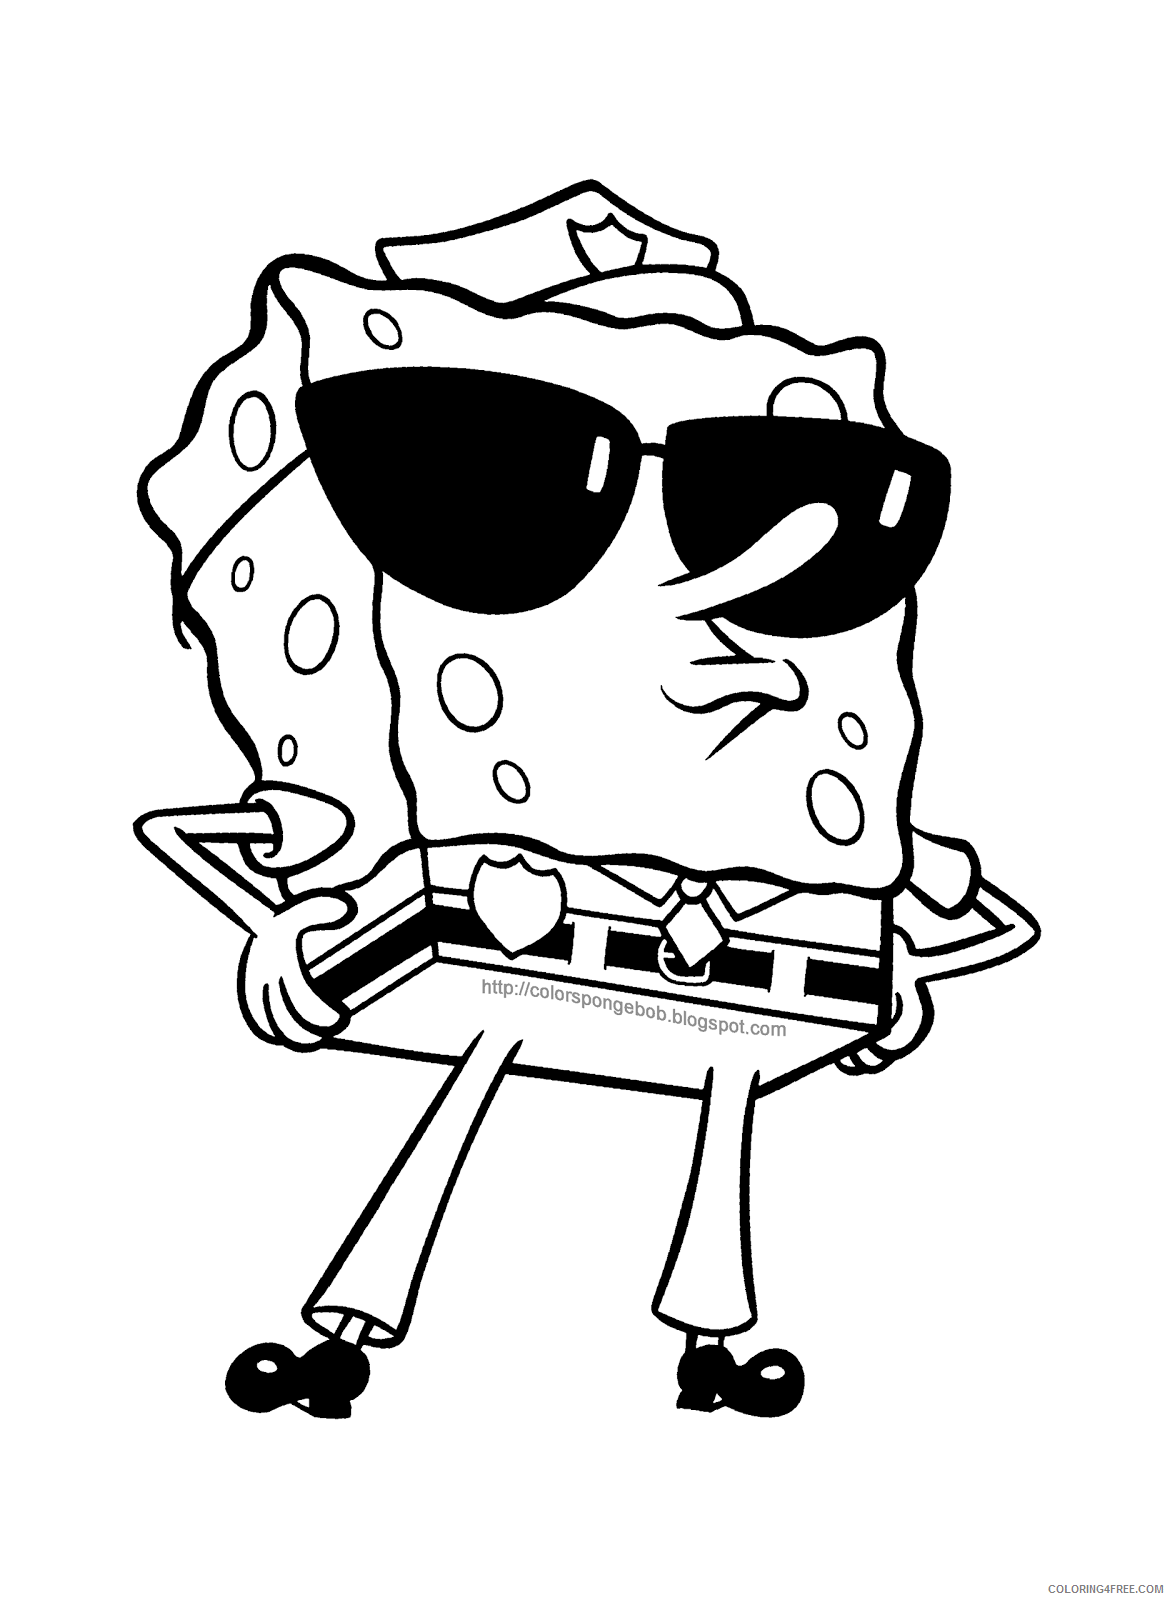 spongebob squarepants coloring pages wearing sunglasses Coloring4free